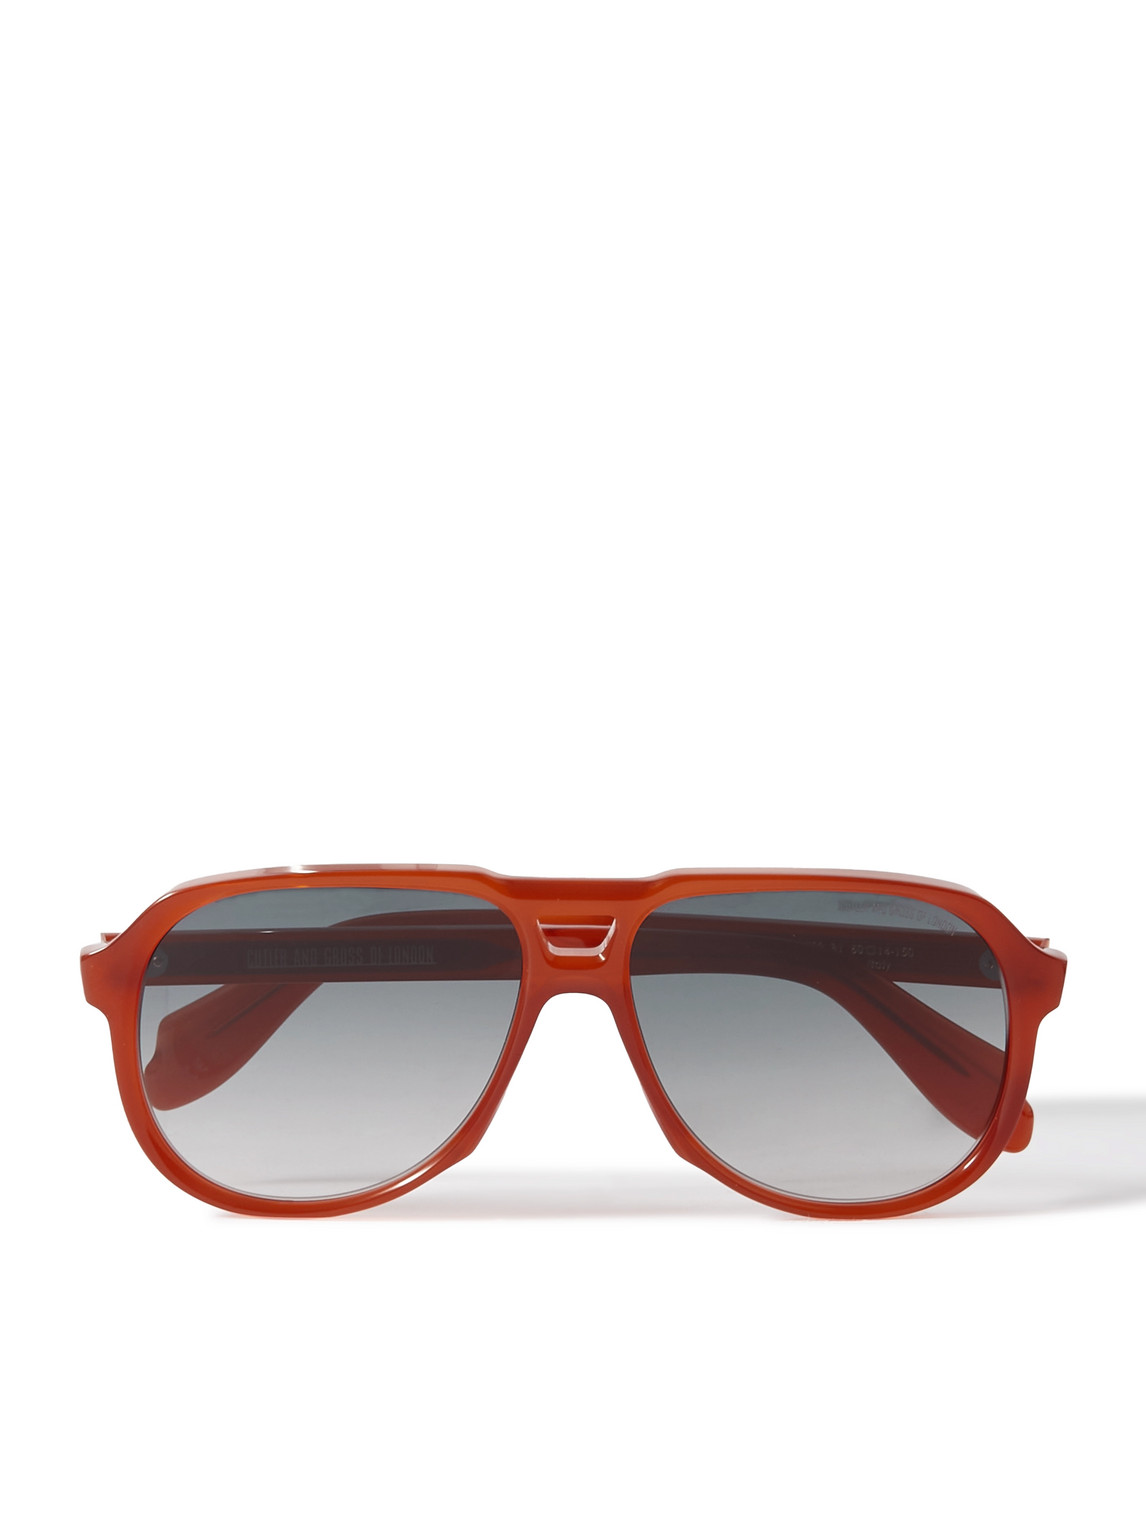 Cutler And Gross 9782 Aviator-style Acetate Sunglasses In Orange